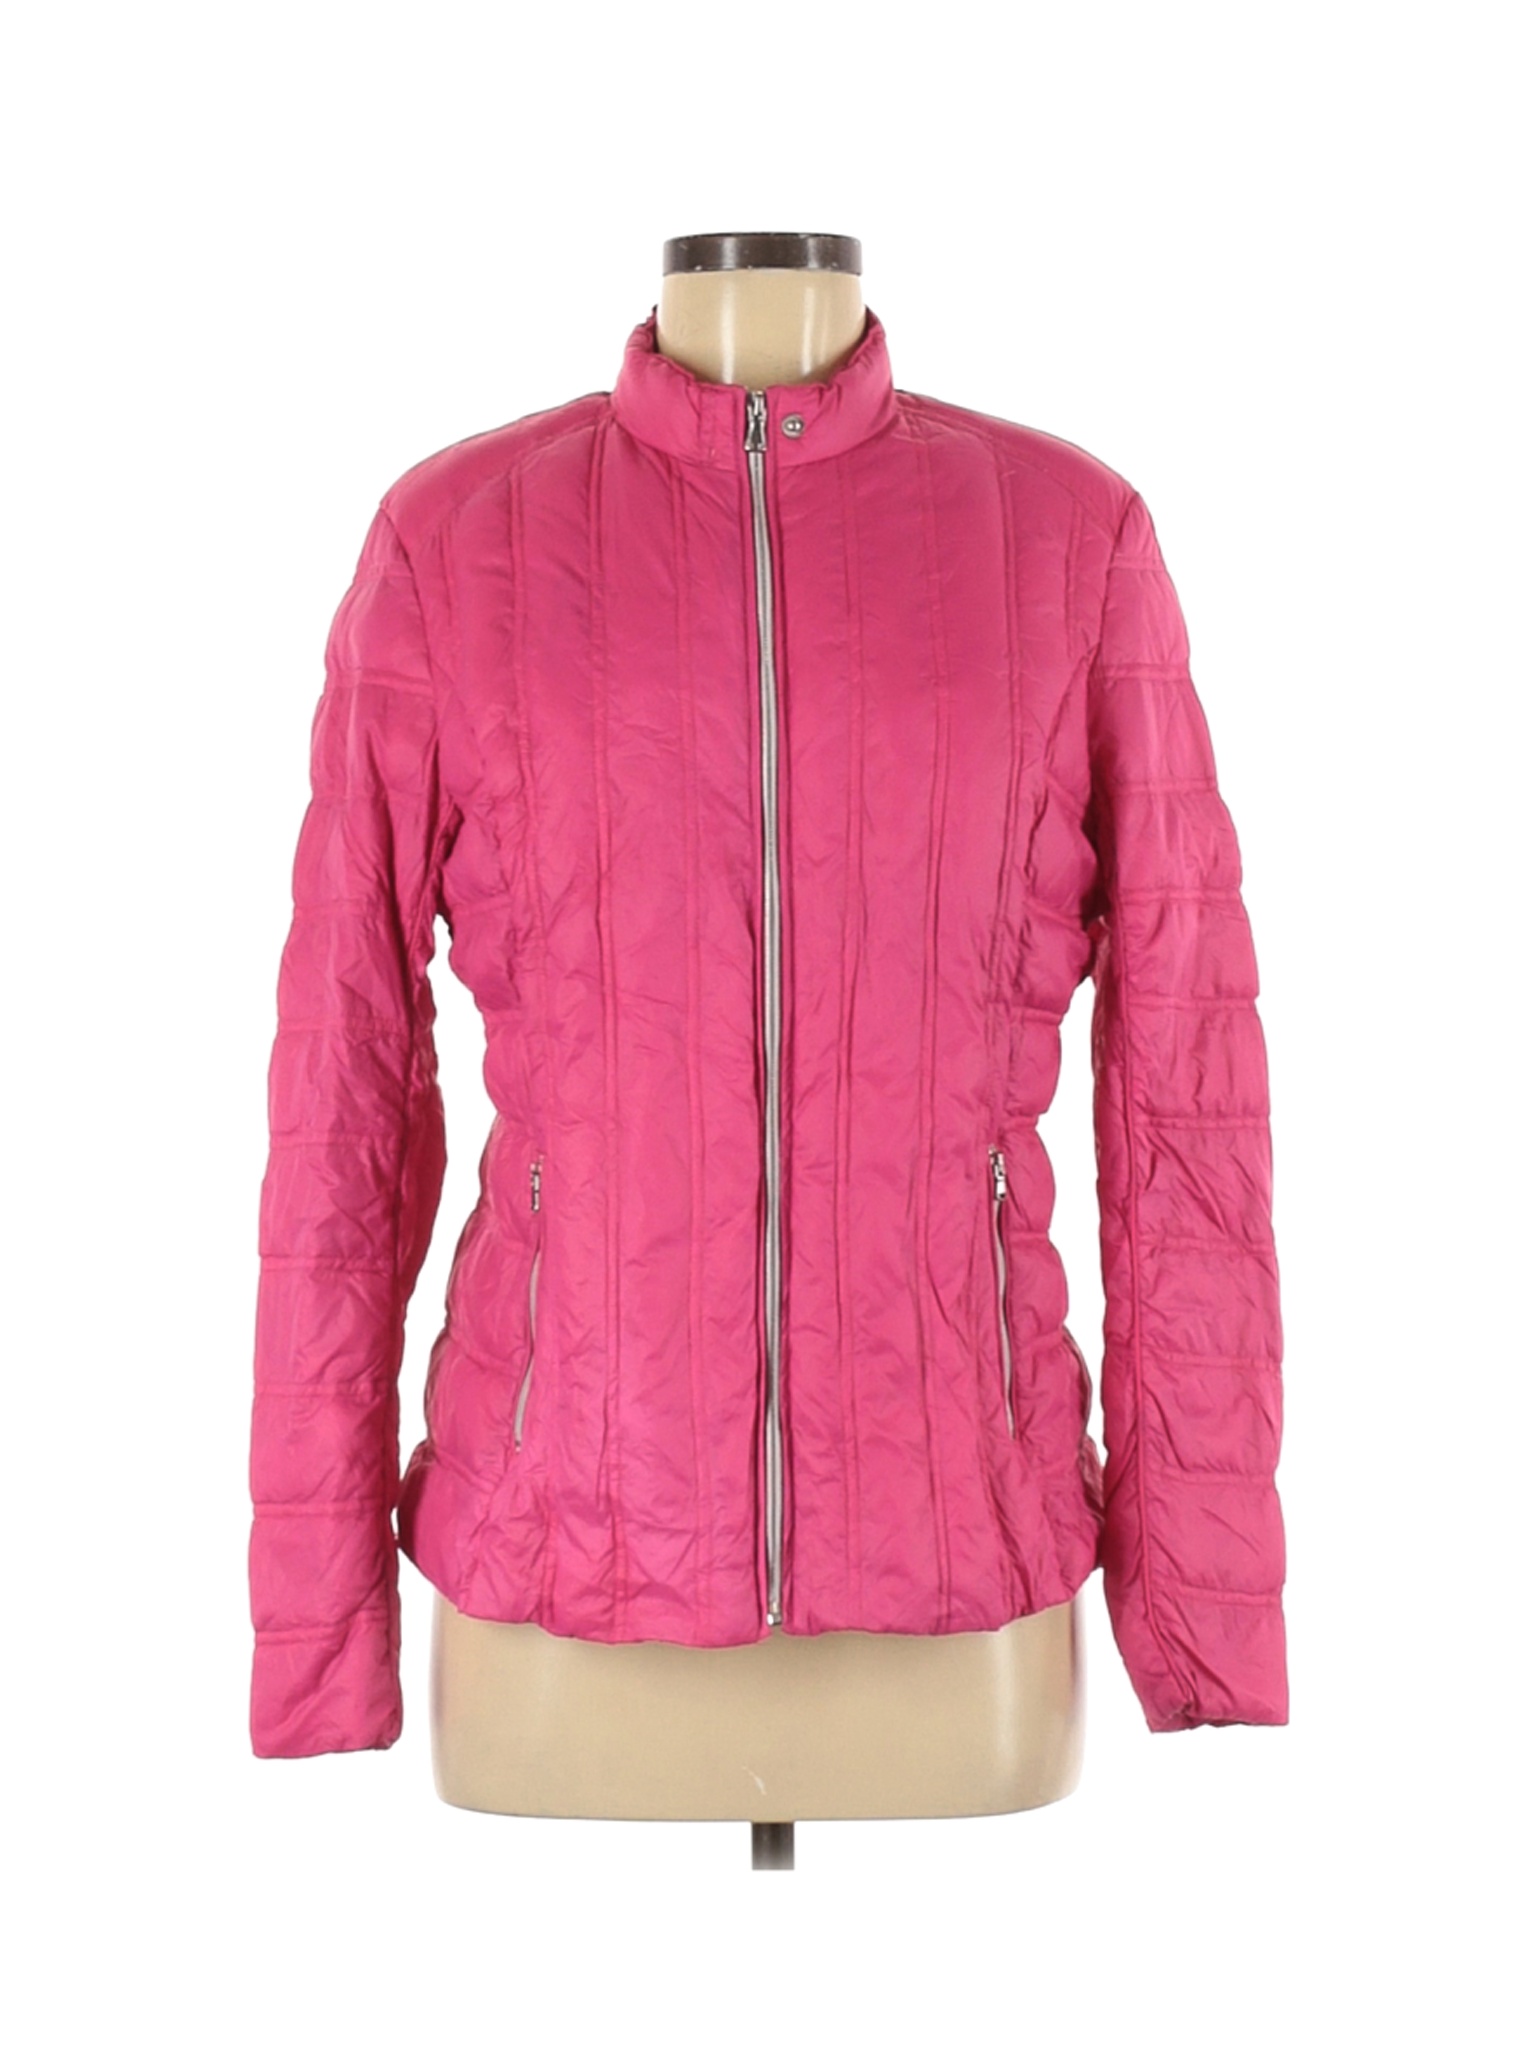 Coldwater Creek Women Pink Jacket M | eBay